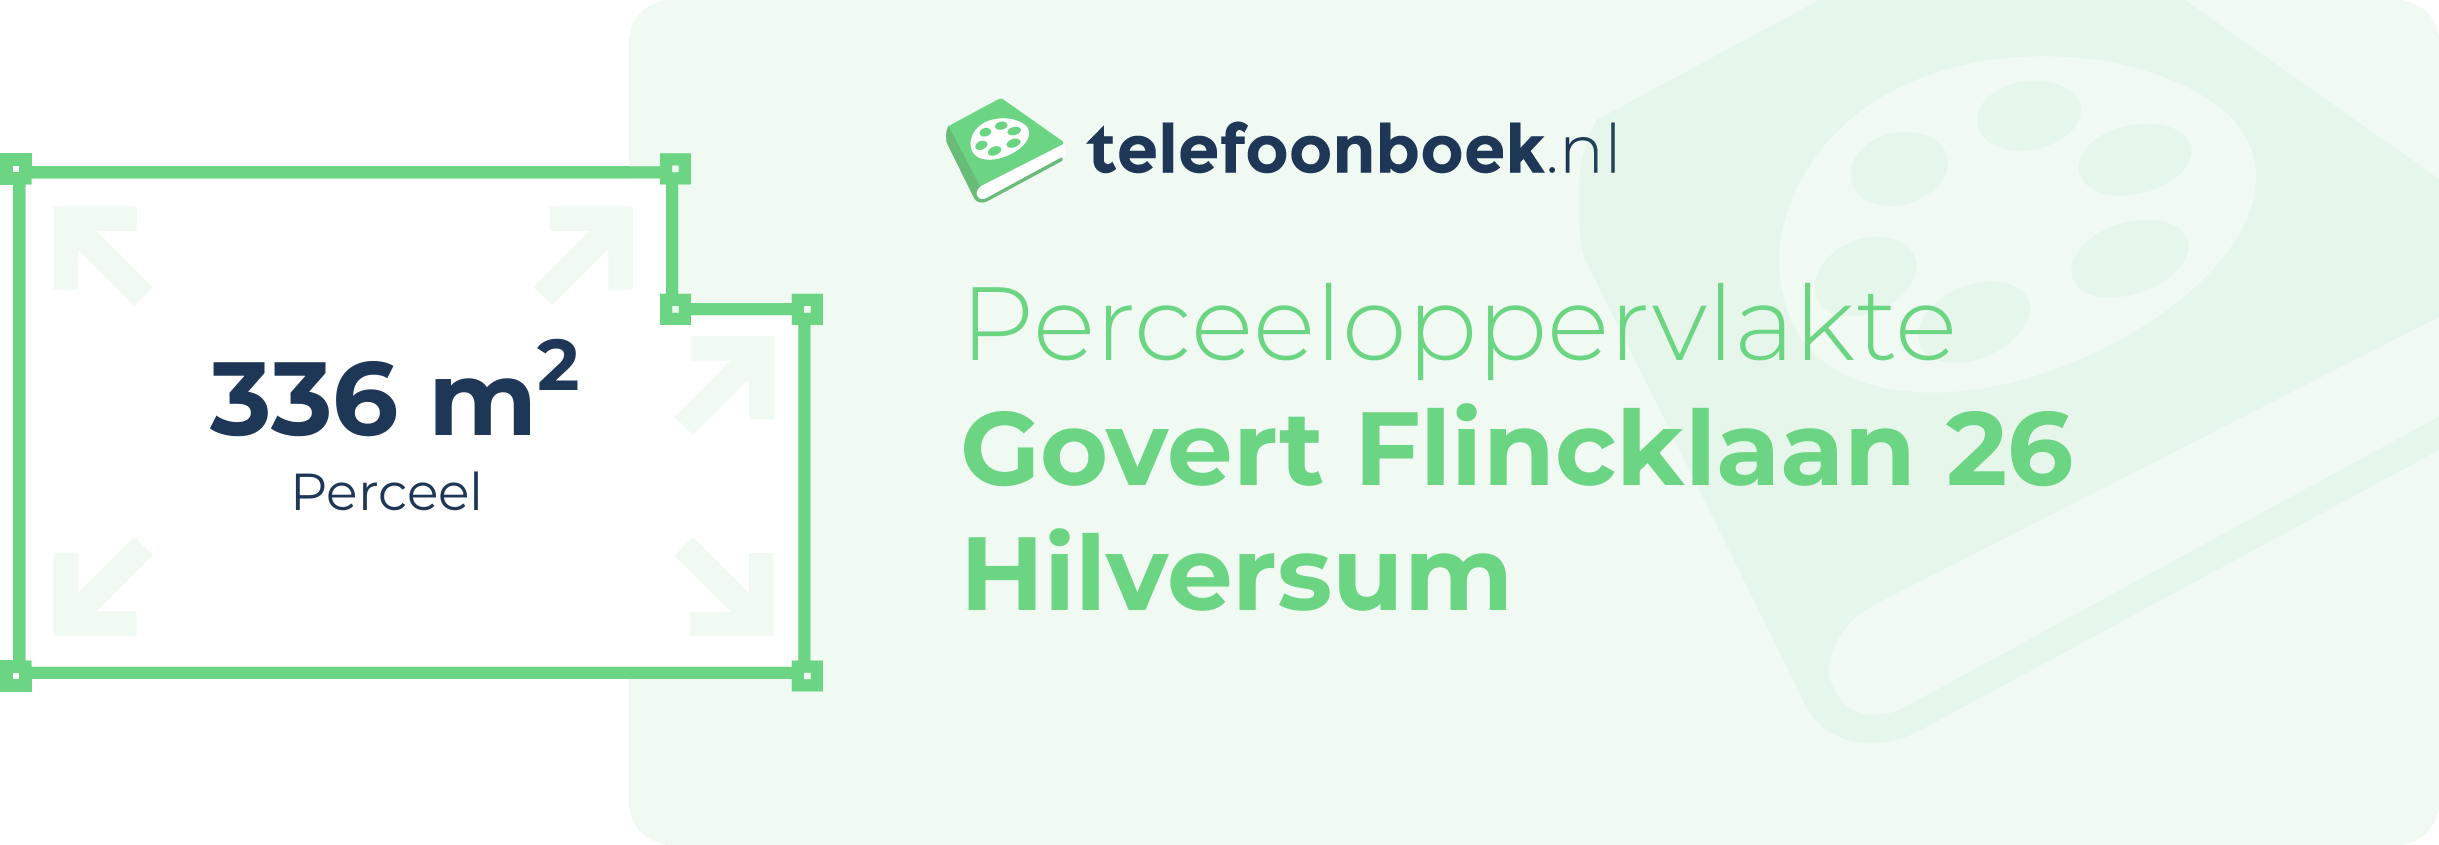 Perceeloppervlakte Govert Flincklaan 26 Hilversum